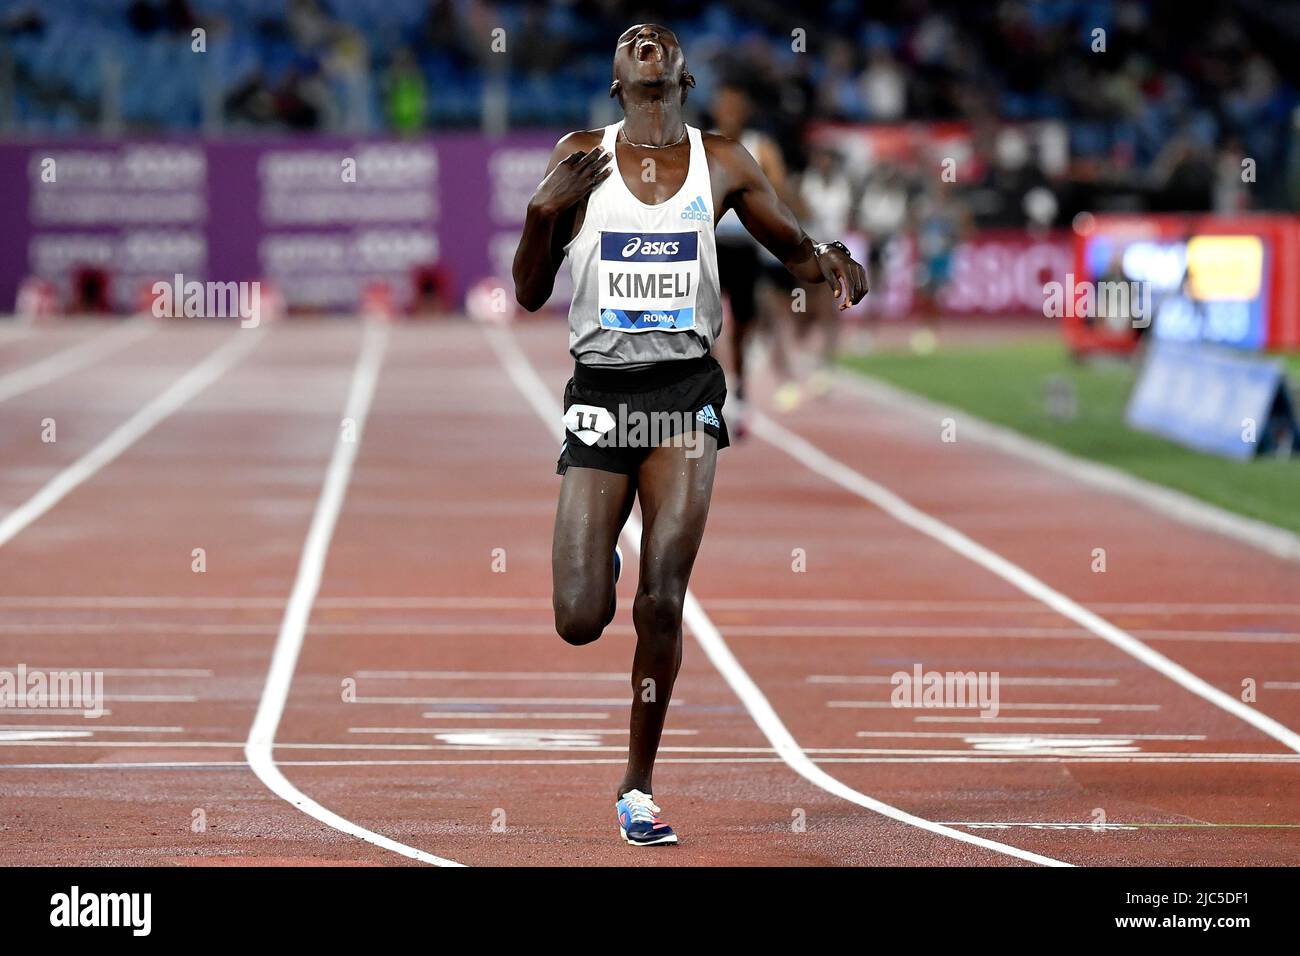 Nichola Kipkorir Kimeli aus Kenia reagiert nach dem Wettkampf im Jahr 5000m während des IAAF Diamond League Golden Gala Meetings im Olimpic Stadium in Rom (Ita Stockfoto